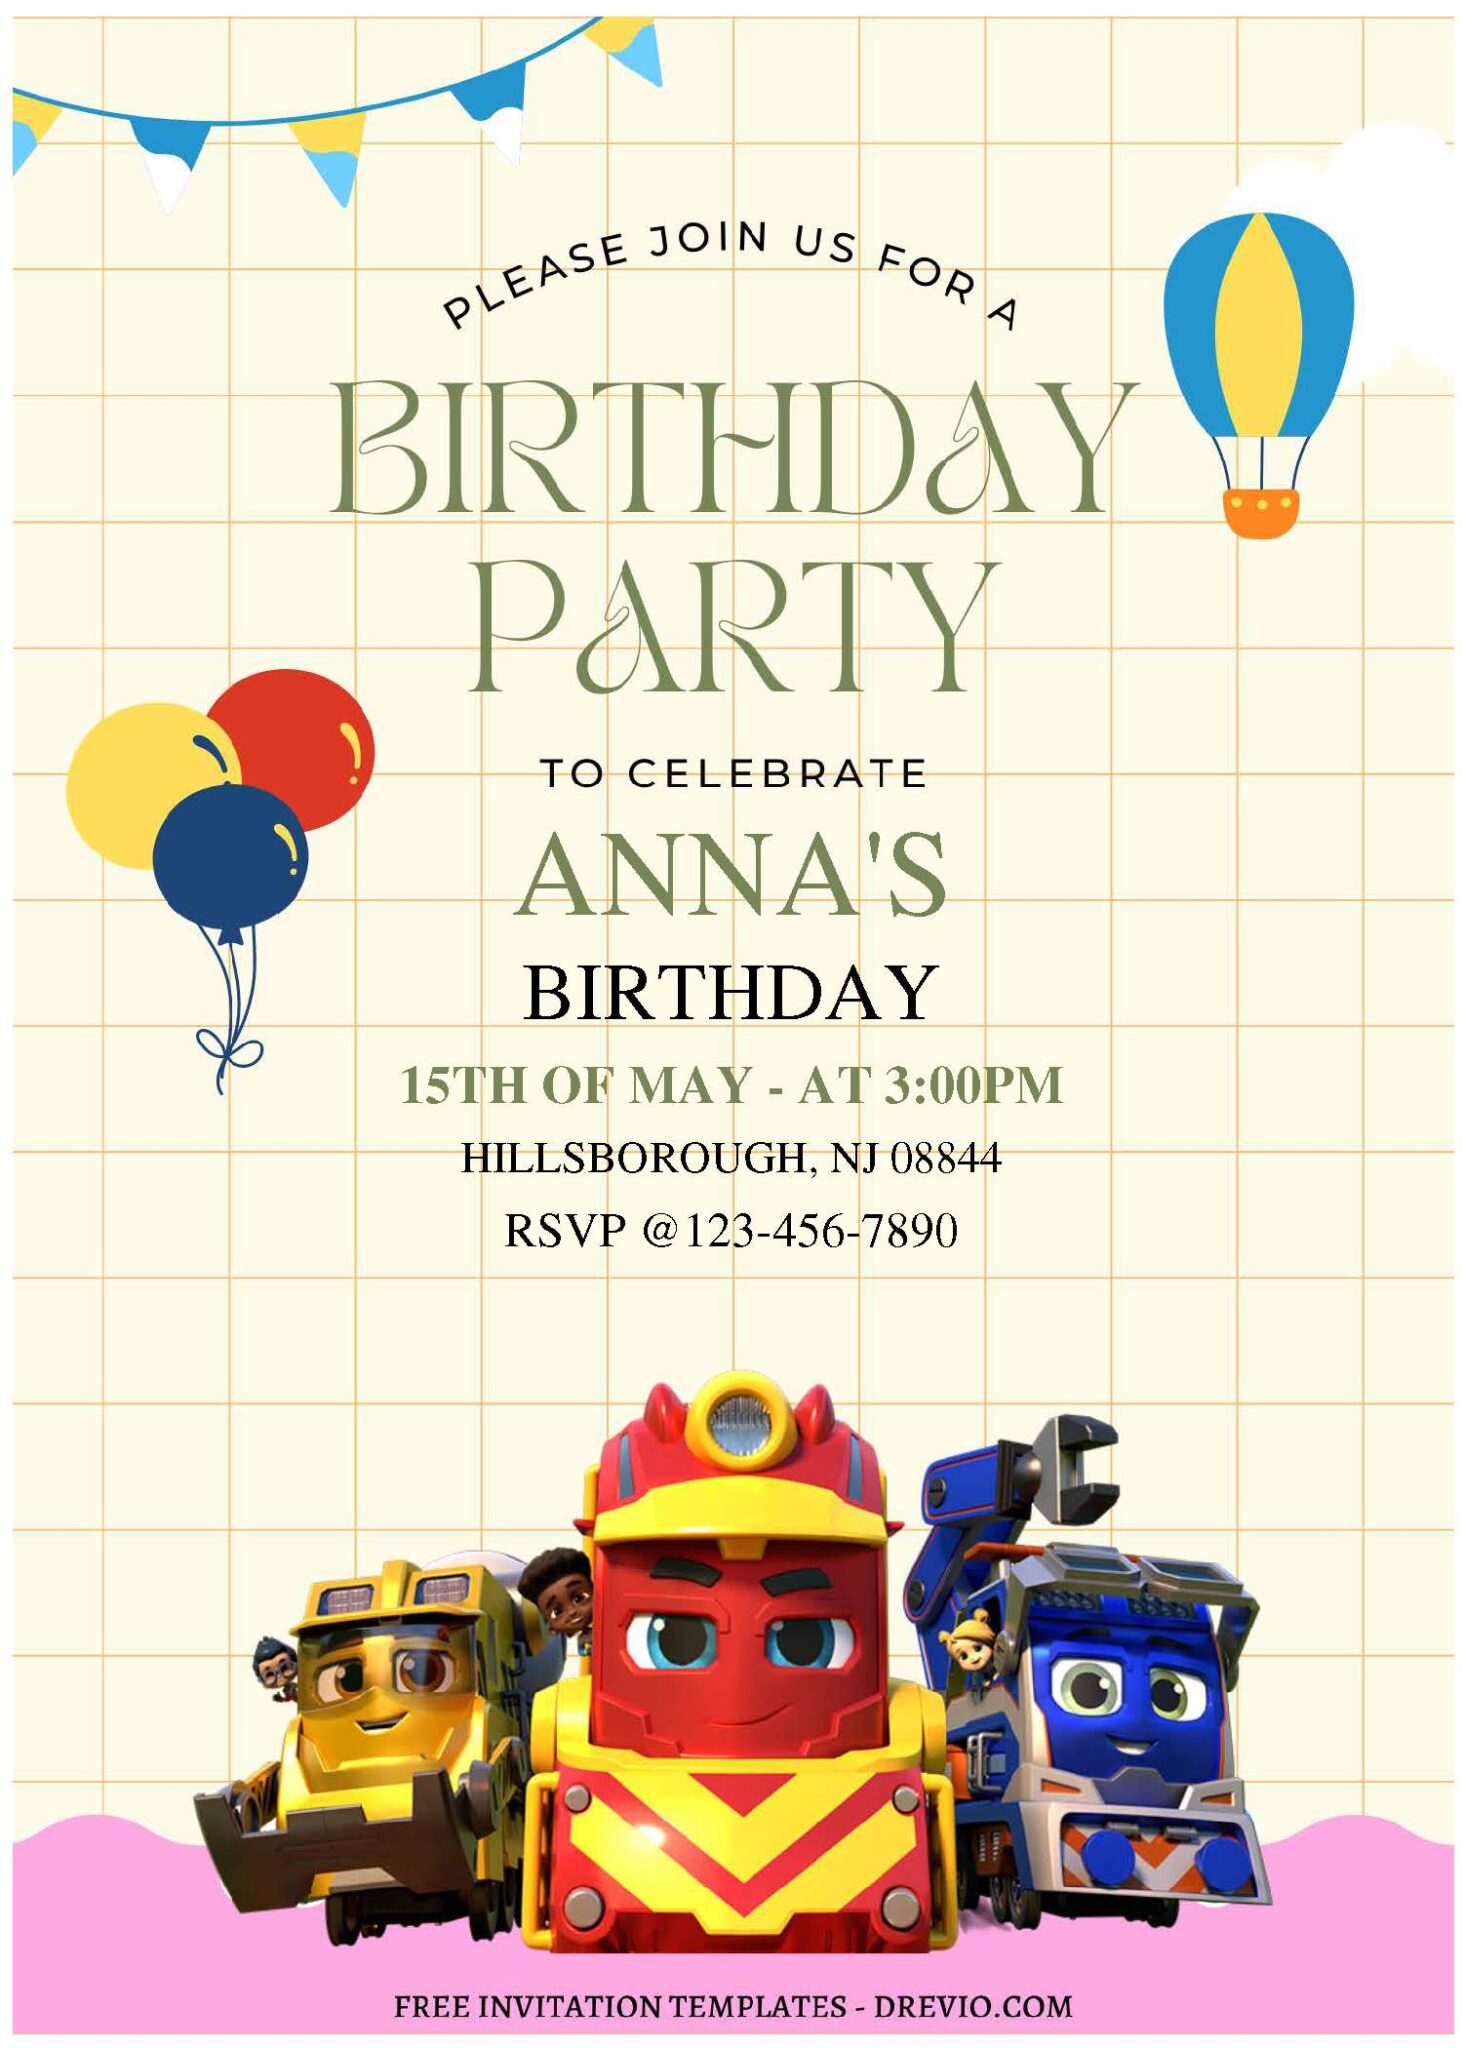 (Free Editable PDF) Mighty Express Train Kids Birthday Invitation ...